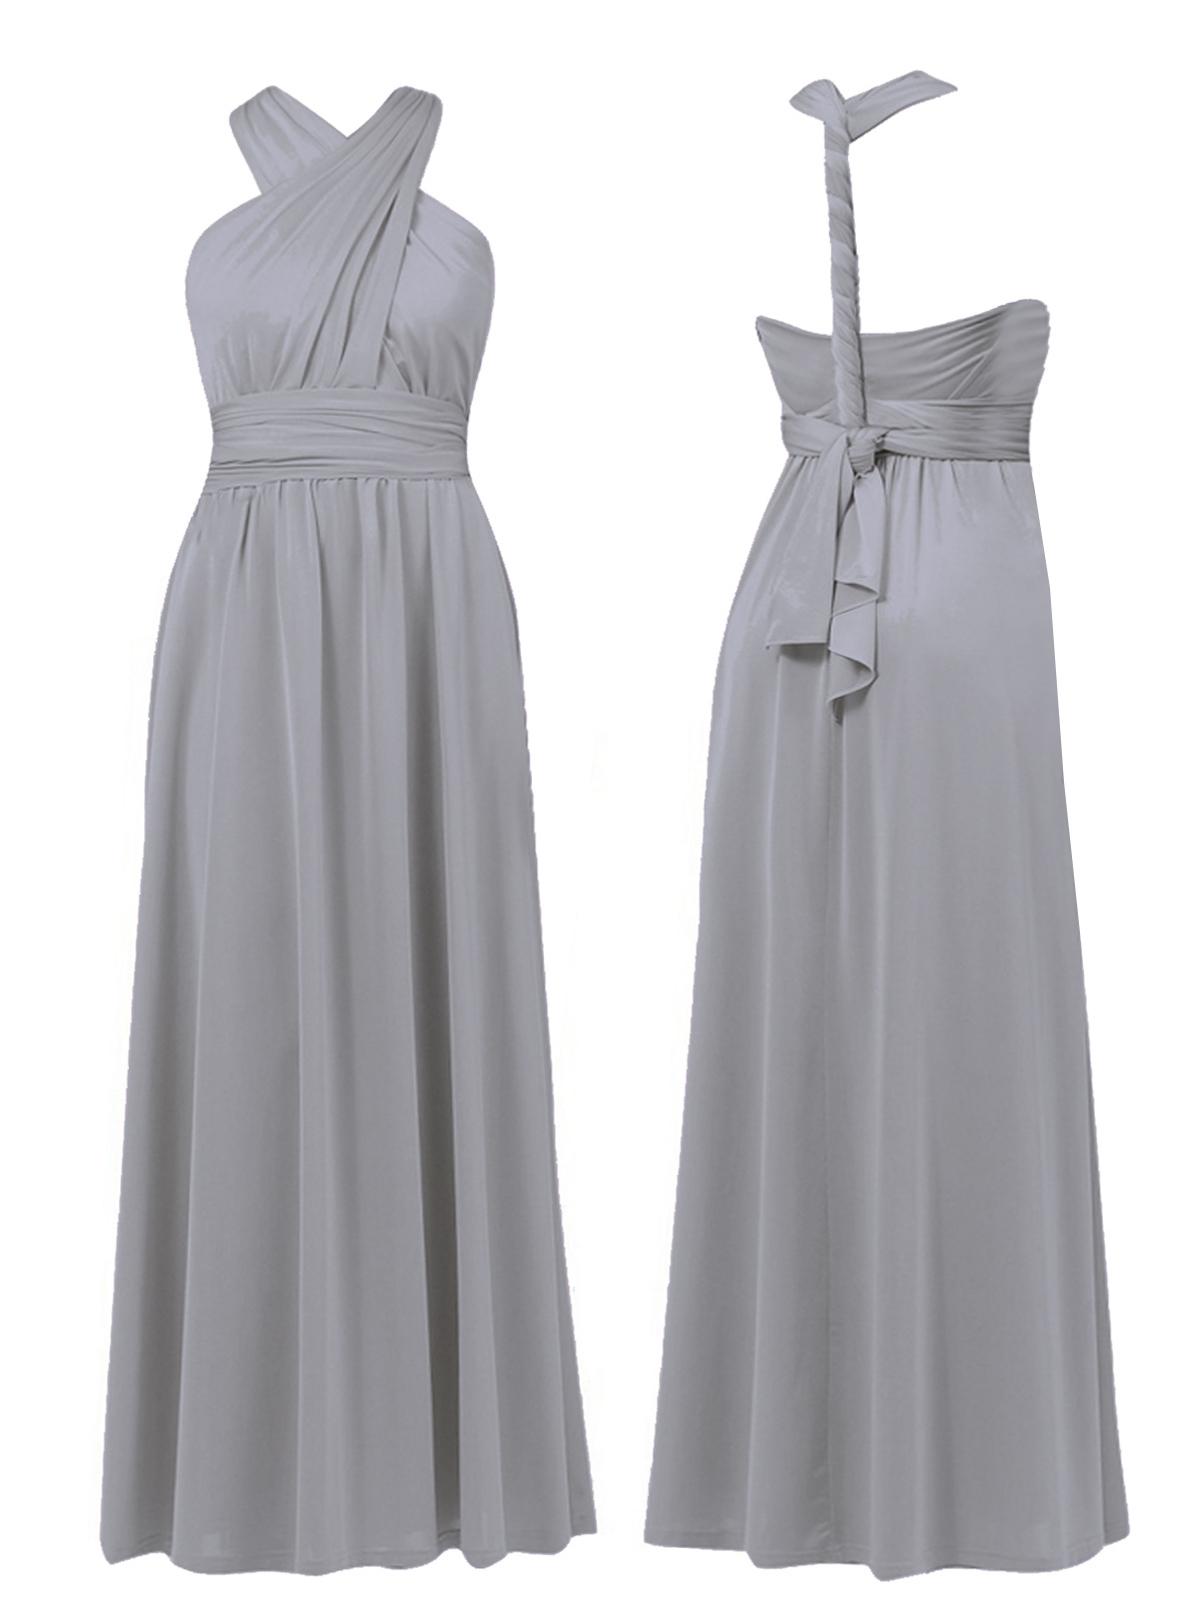 Debenhams - - D3benhams GREY Multiway Debut Long Evening Dress - Size 6 ...